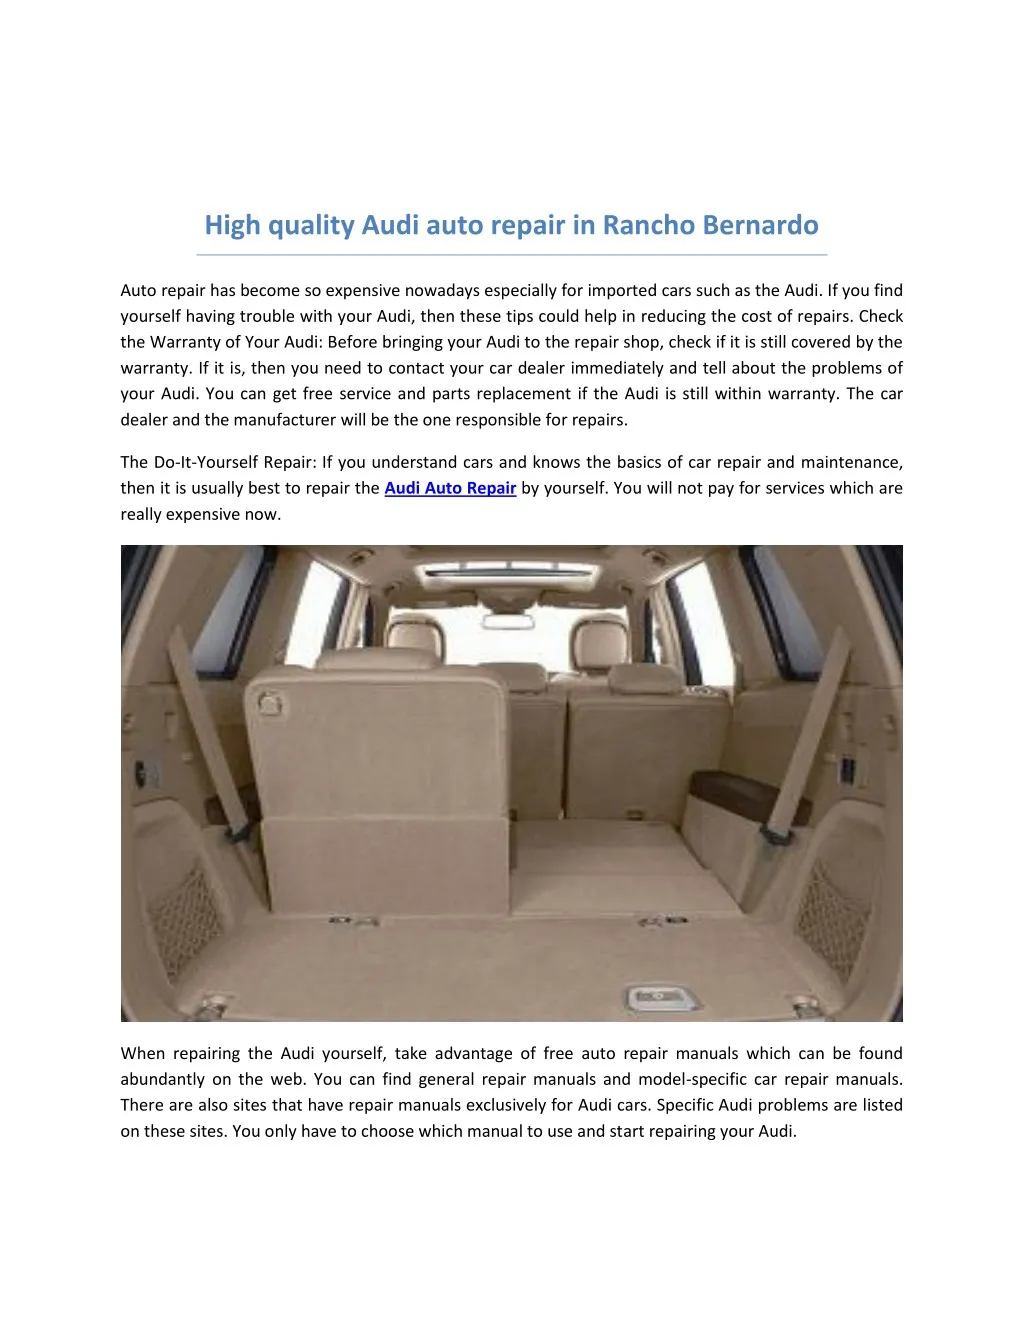 high quality audi auto repair in rancho bernardo